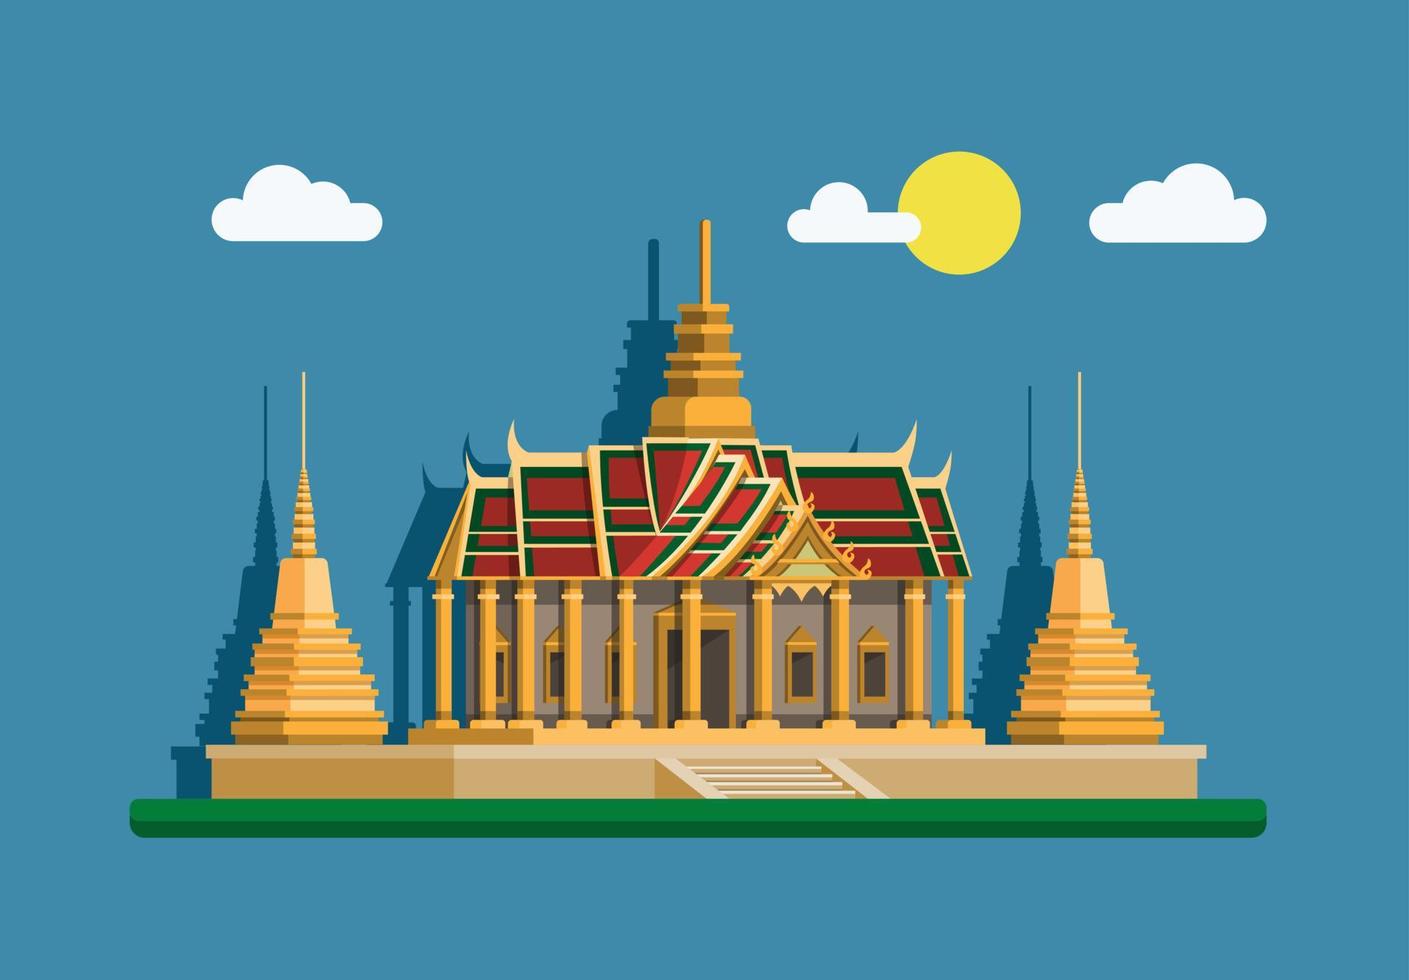 grote paleis gouden pagode. Bangkok, Thailand landmark bouwconcept in platte cartoon illustratie vector